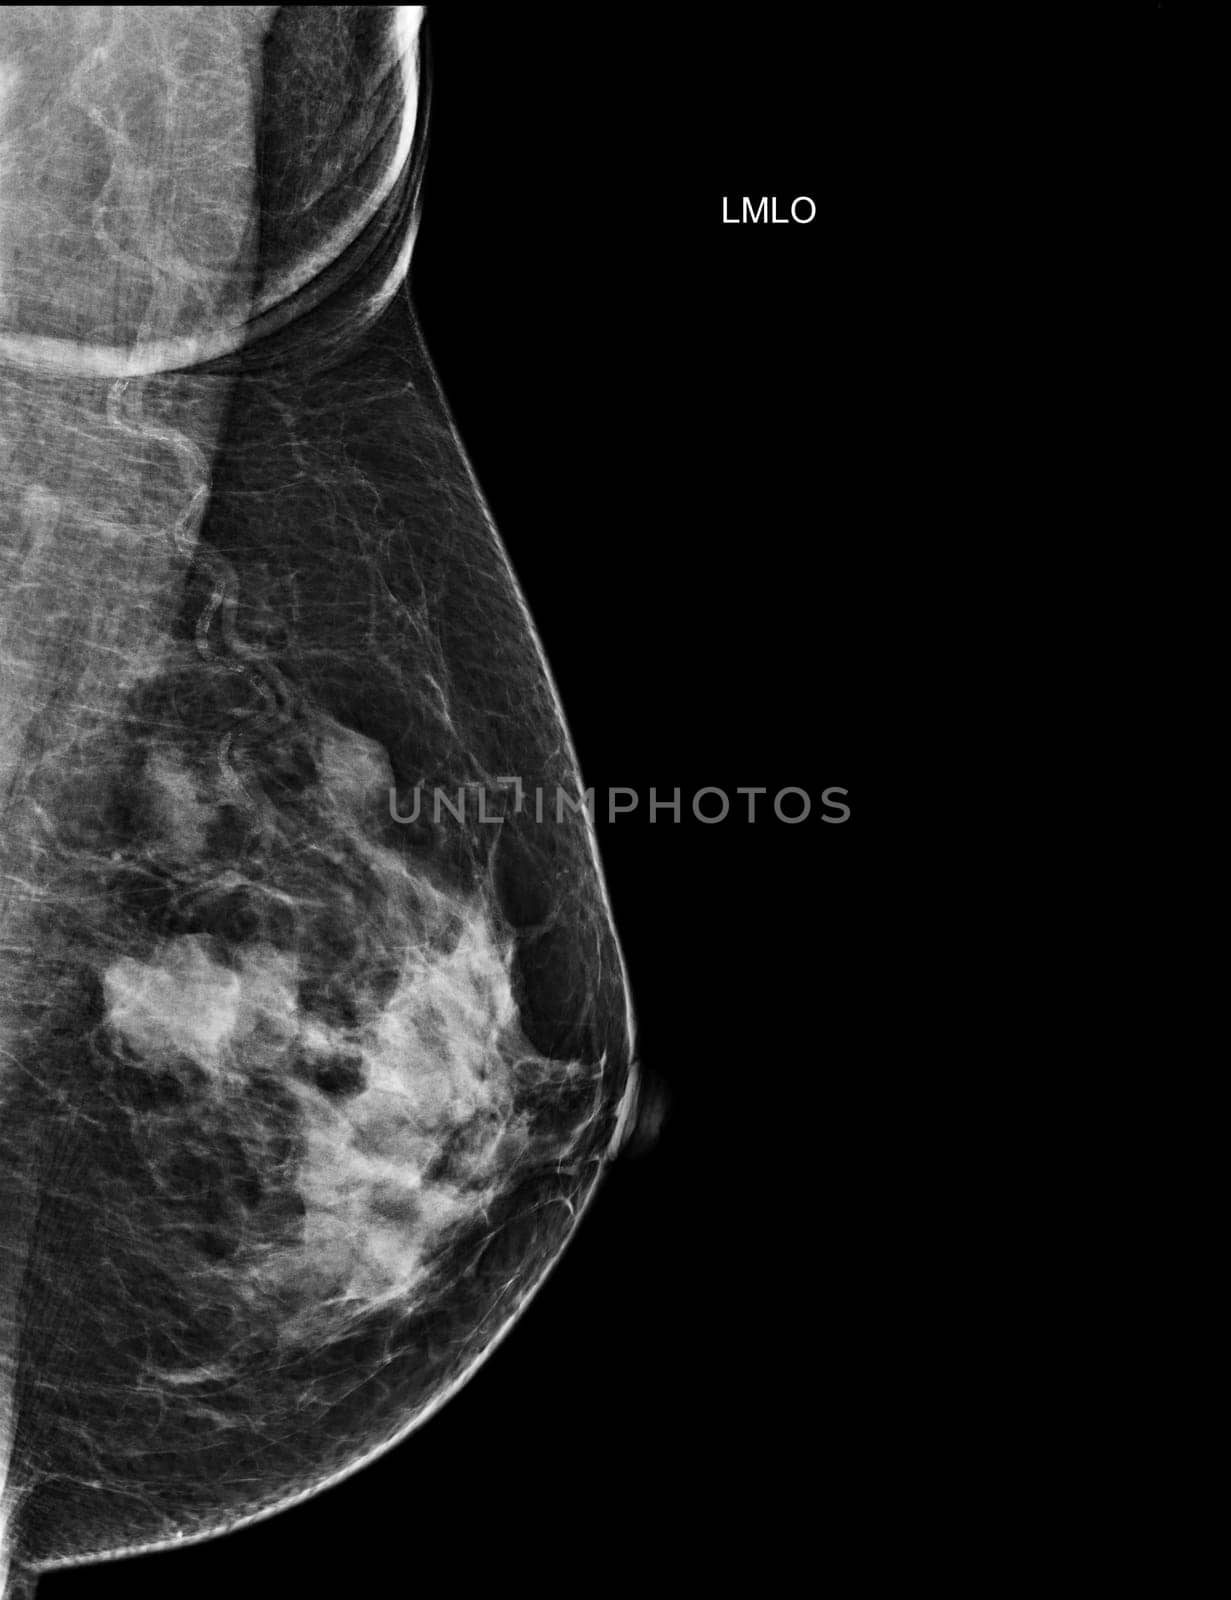 X-ray Digital Mammogram Left side MLO view . by samunella